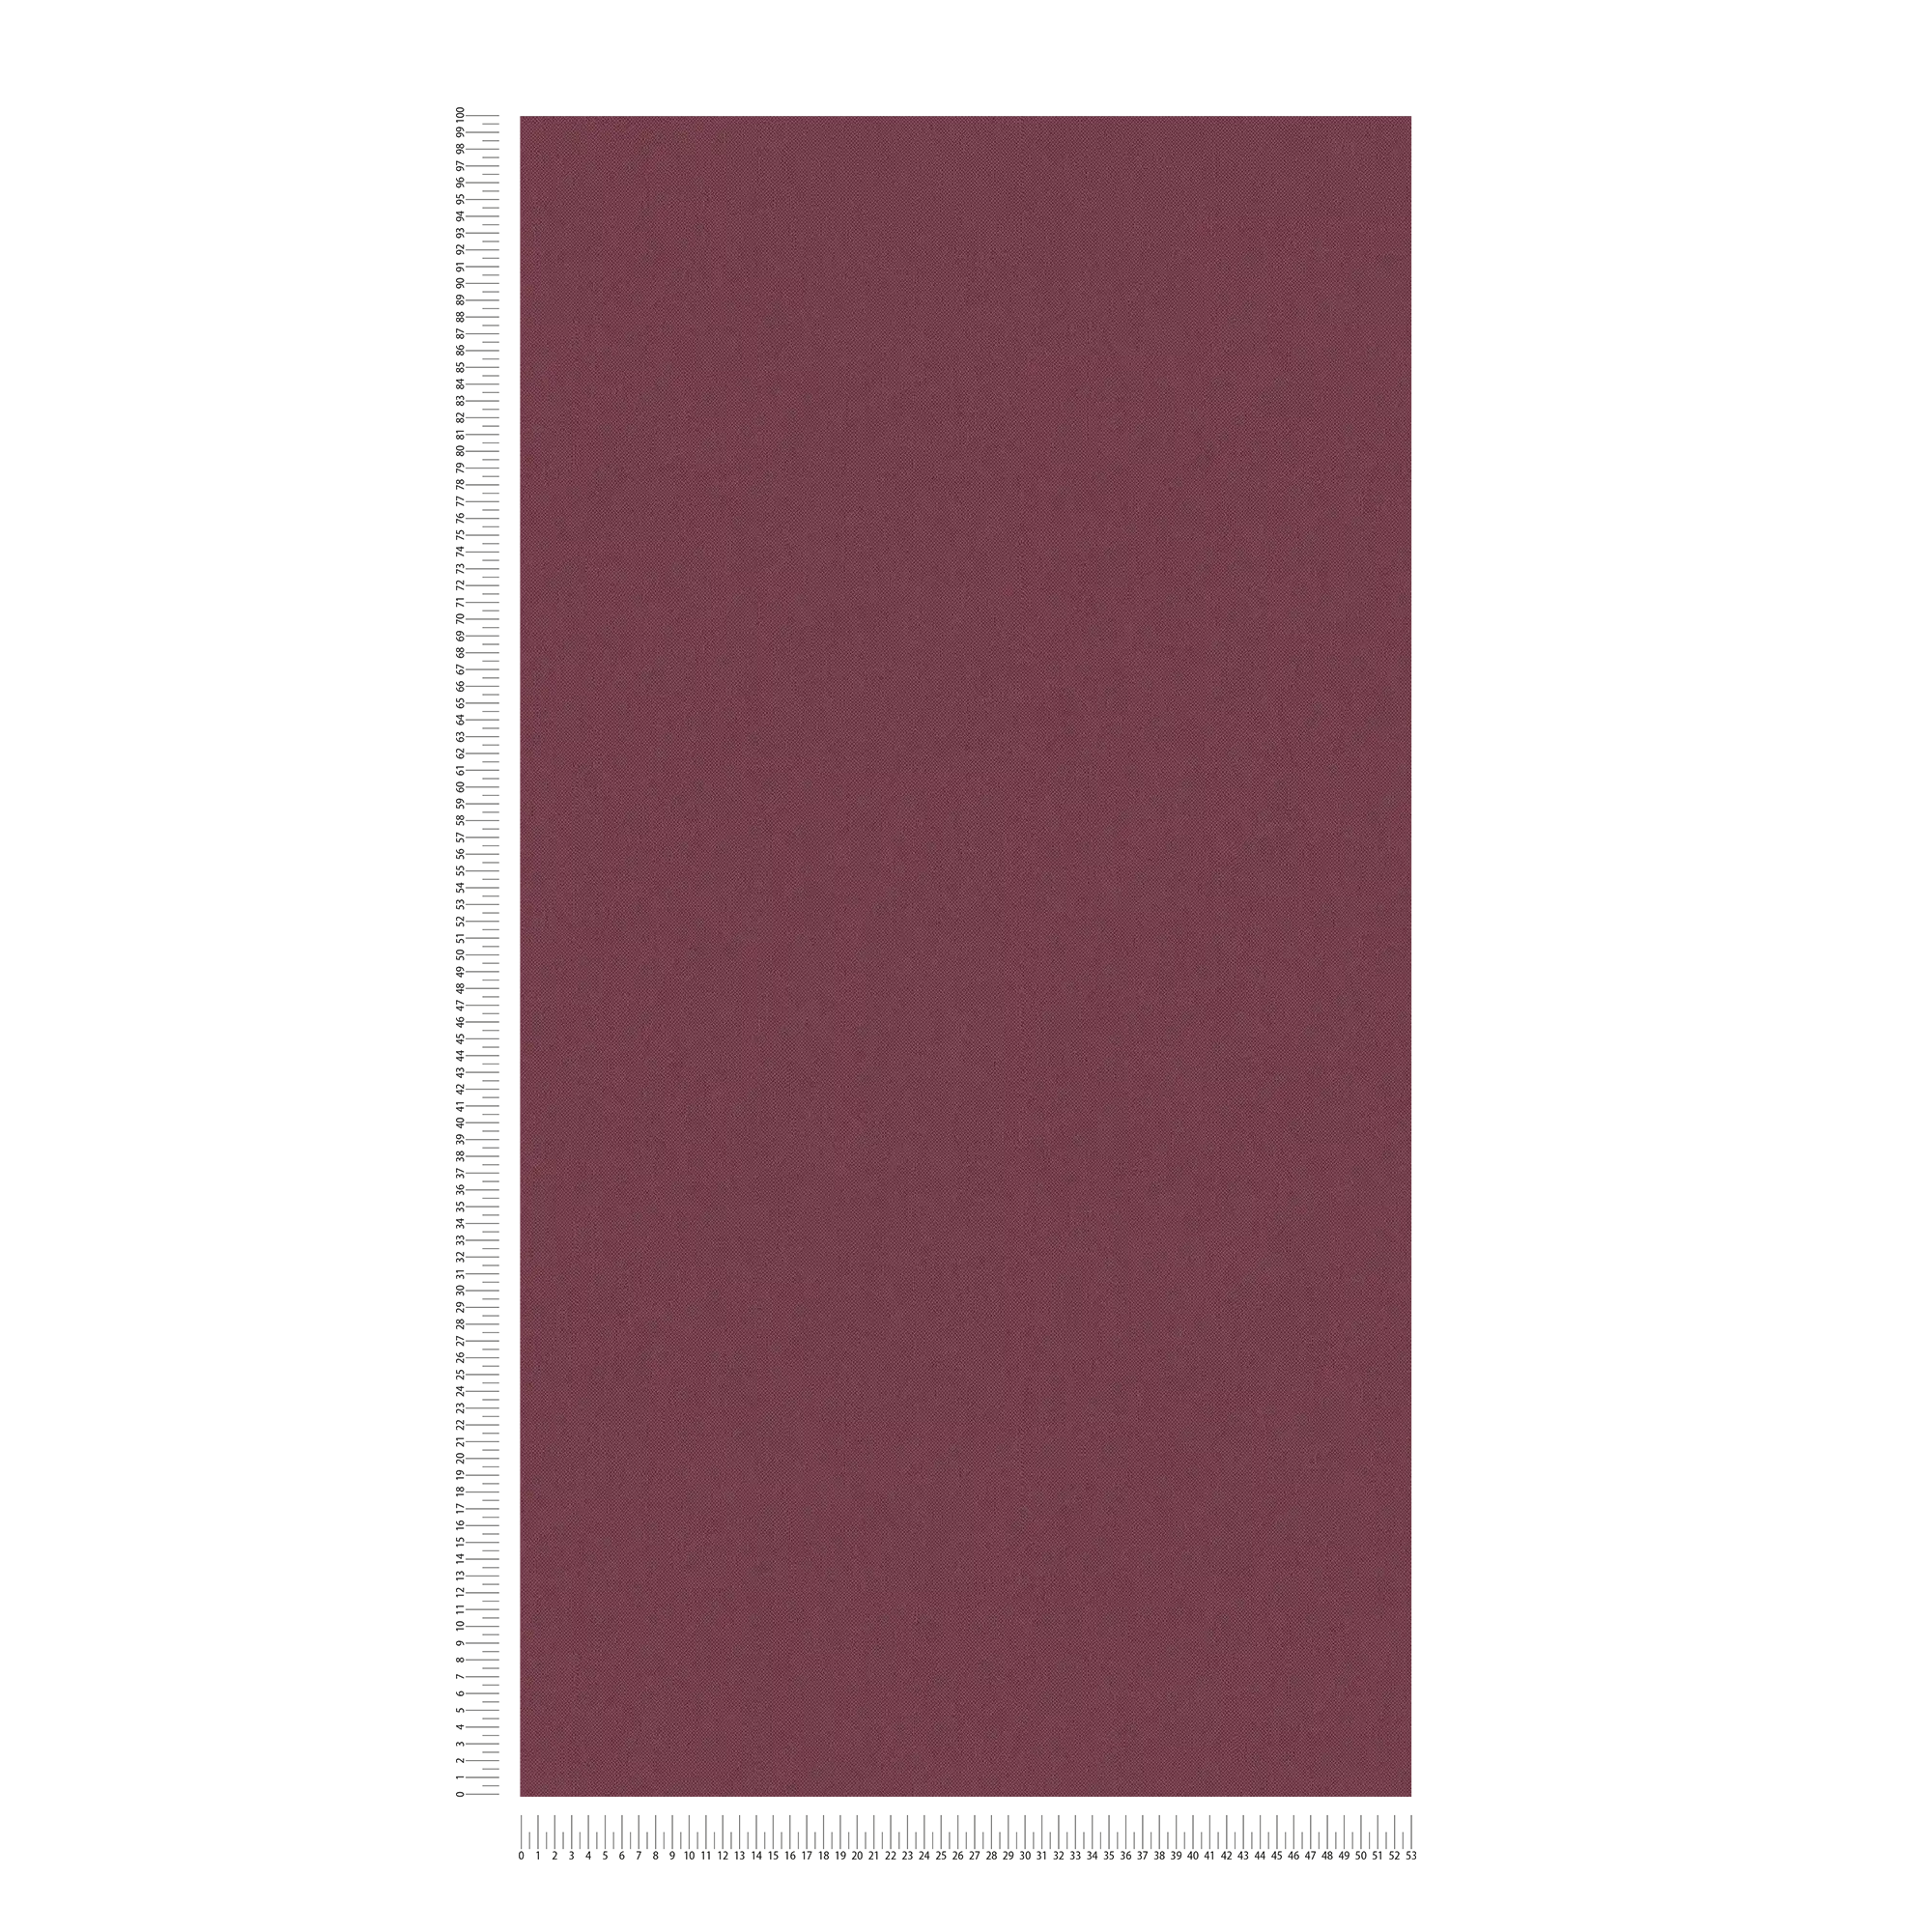             Bordeaux rote Tapete mit Textilstruktur Violett & Rot
        